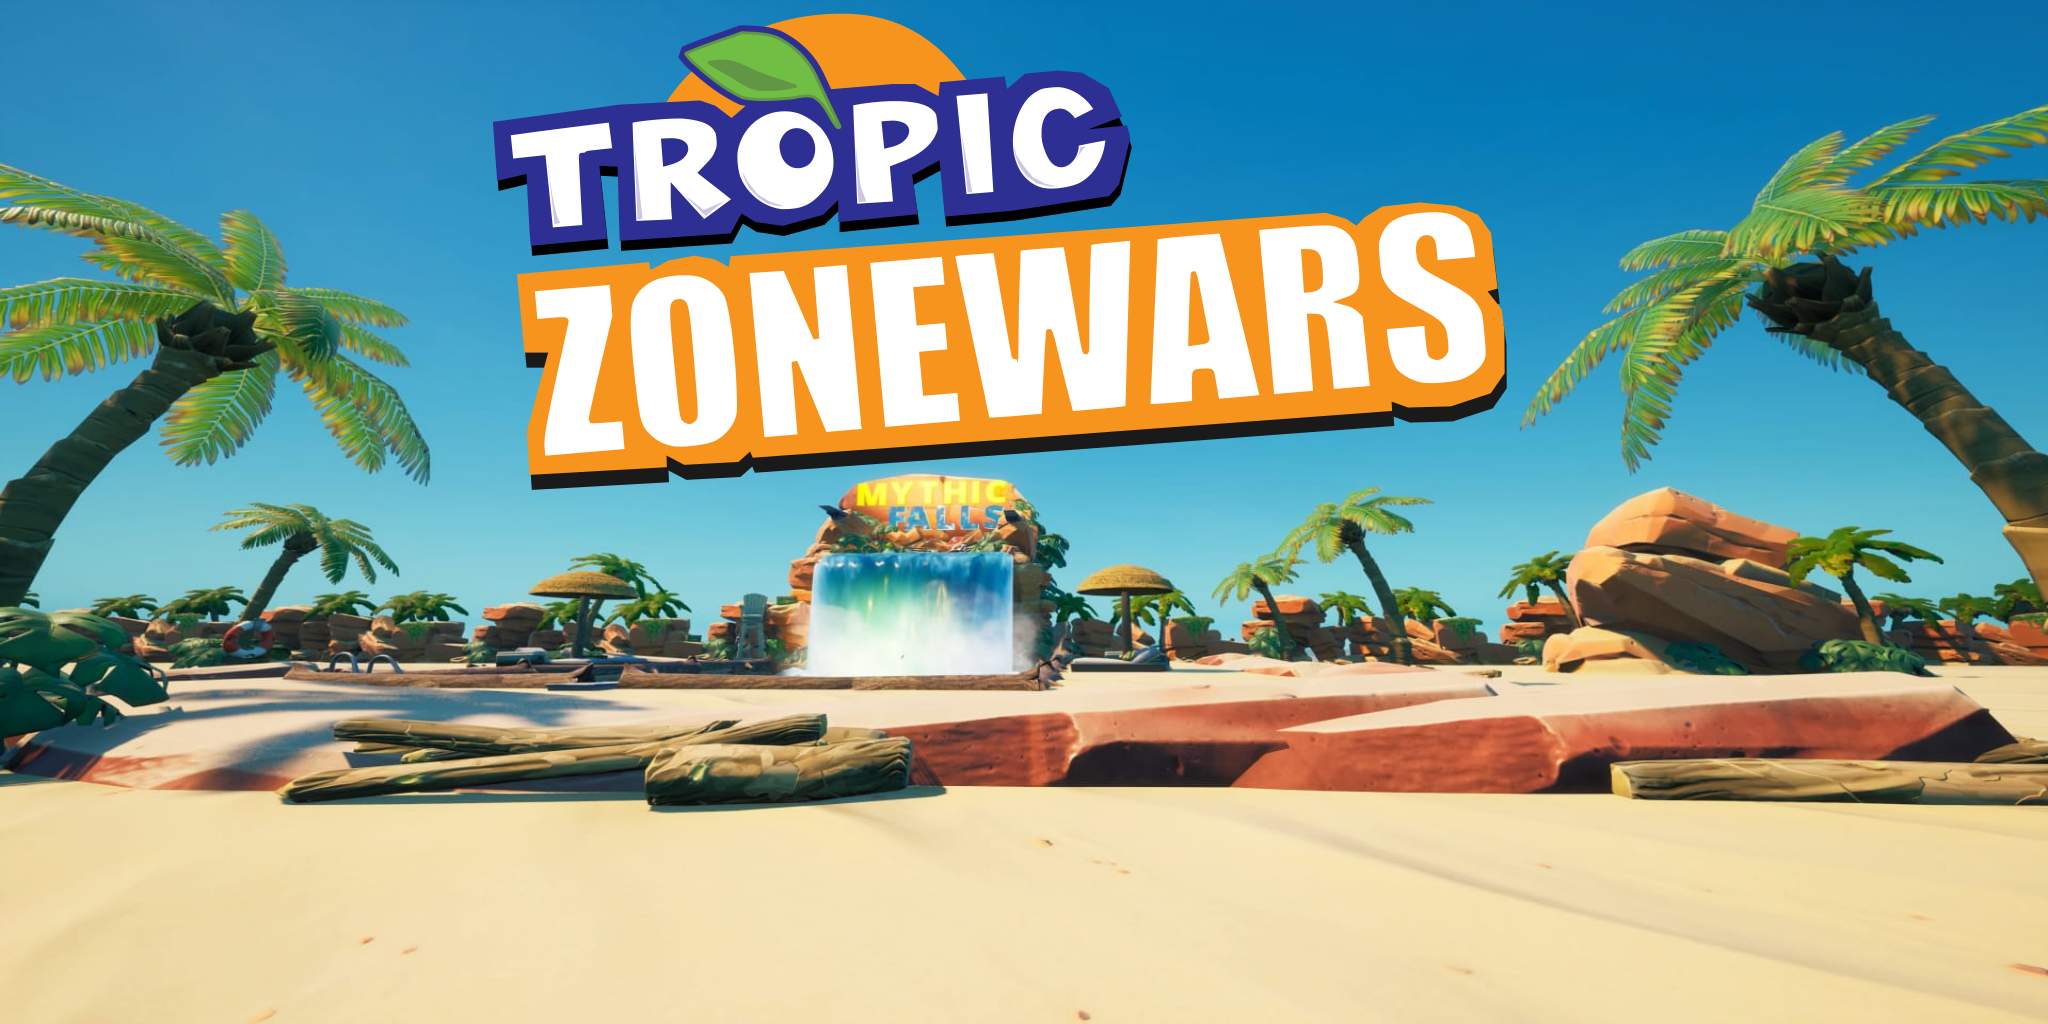 Tropic ZoneWars image 2